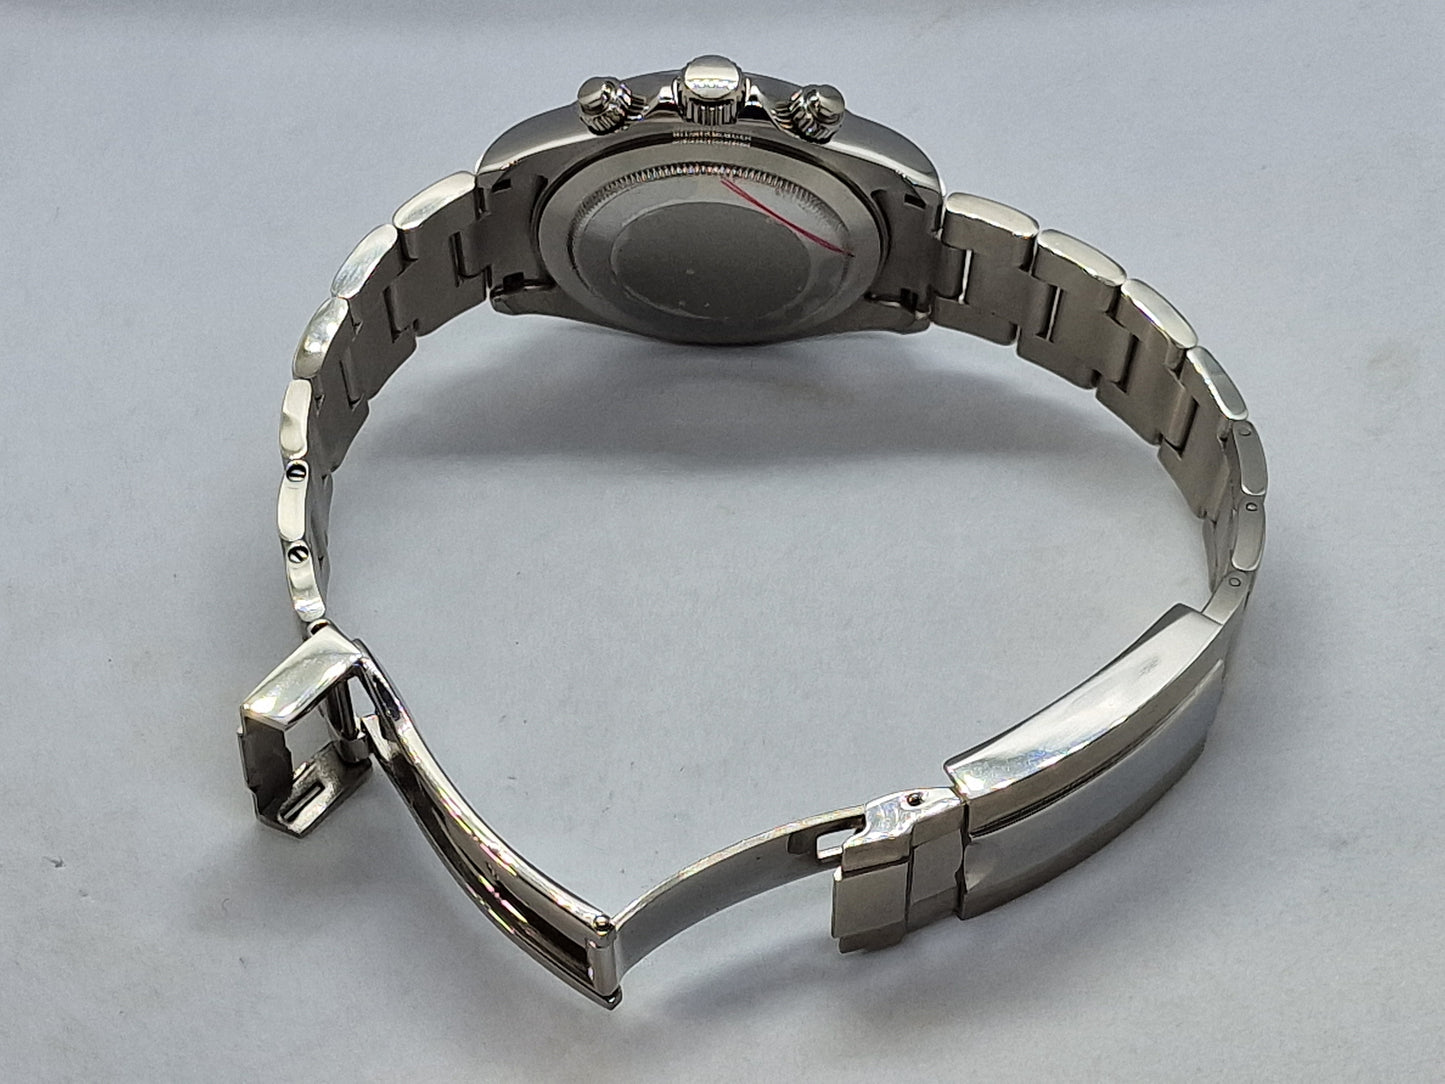 Seiko Mod Daytona cronografo nero Vk63 quarzo 40 mm vetro zaffiro